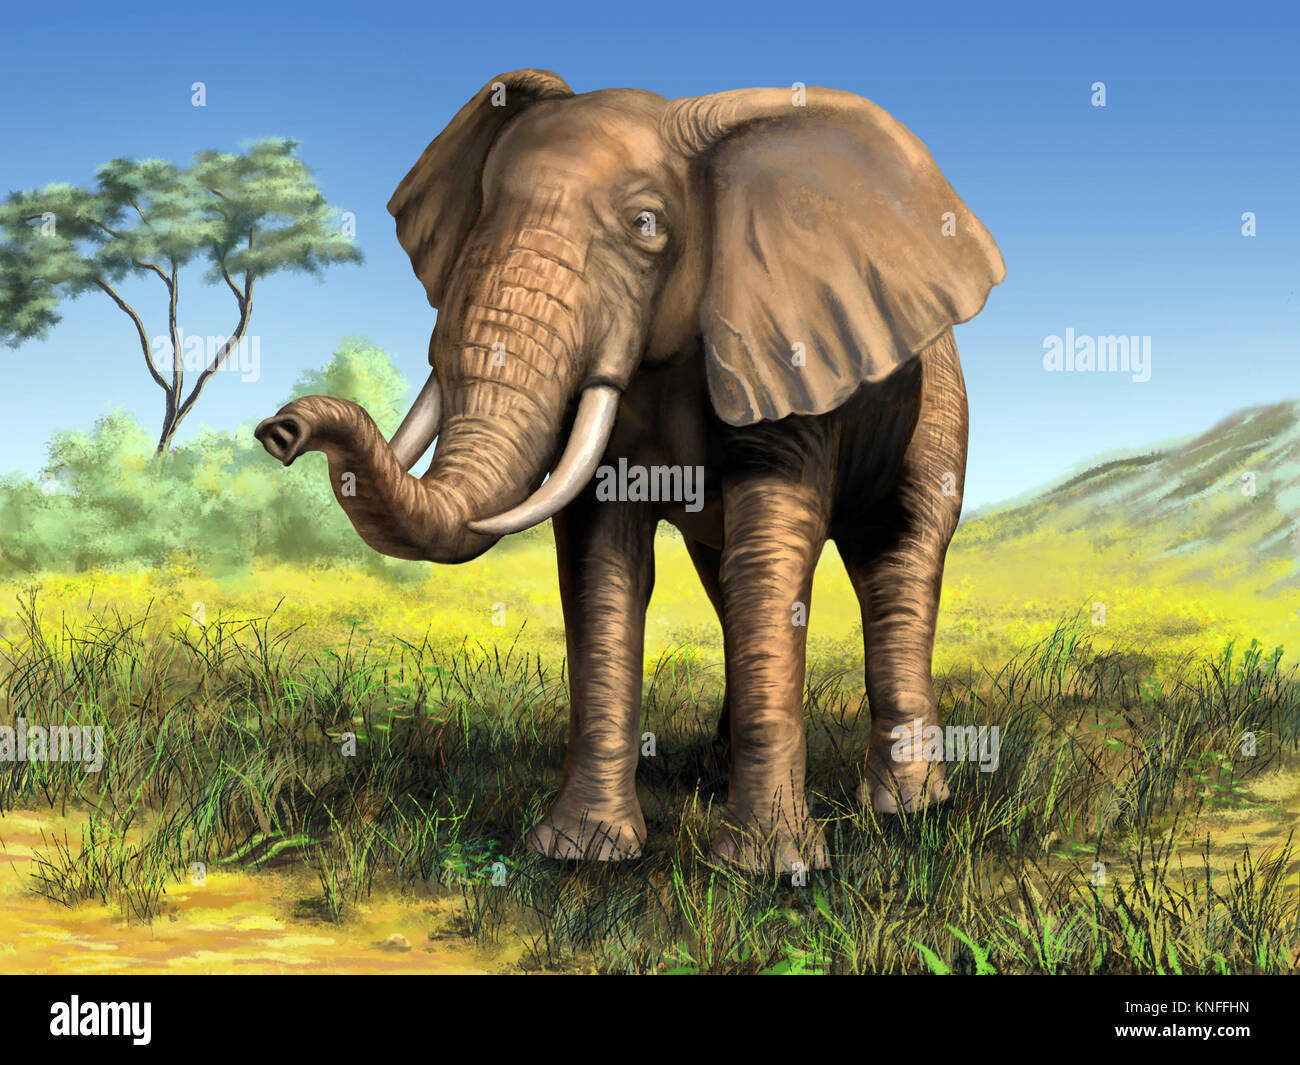 Wildlife: elephant in its native african environment. Digital illustration. Stock Photo